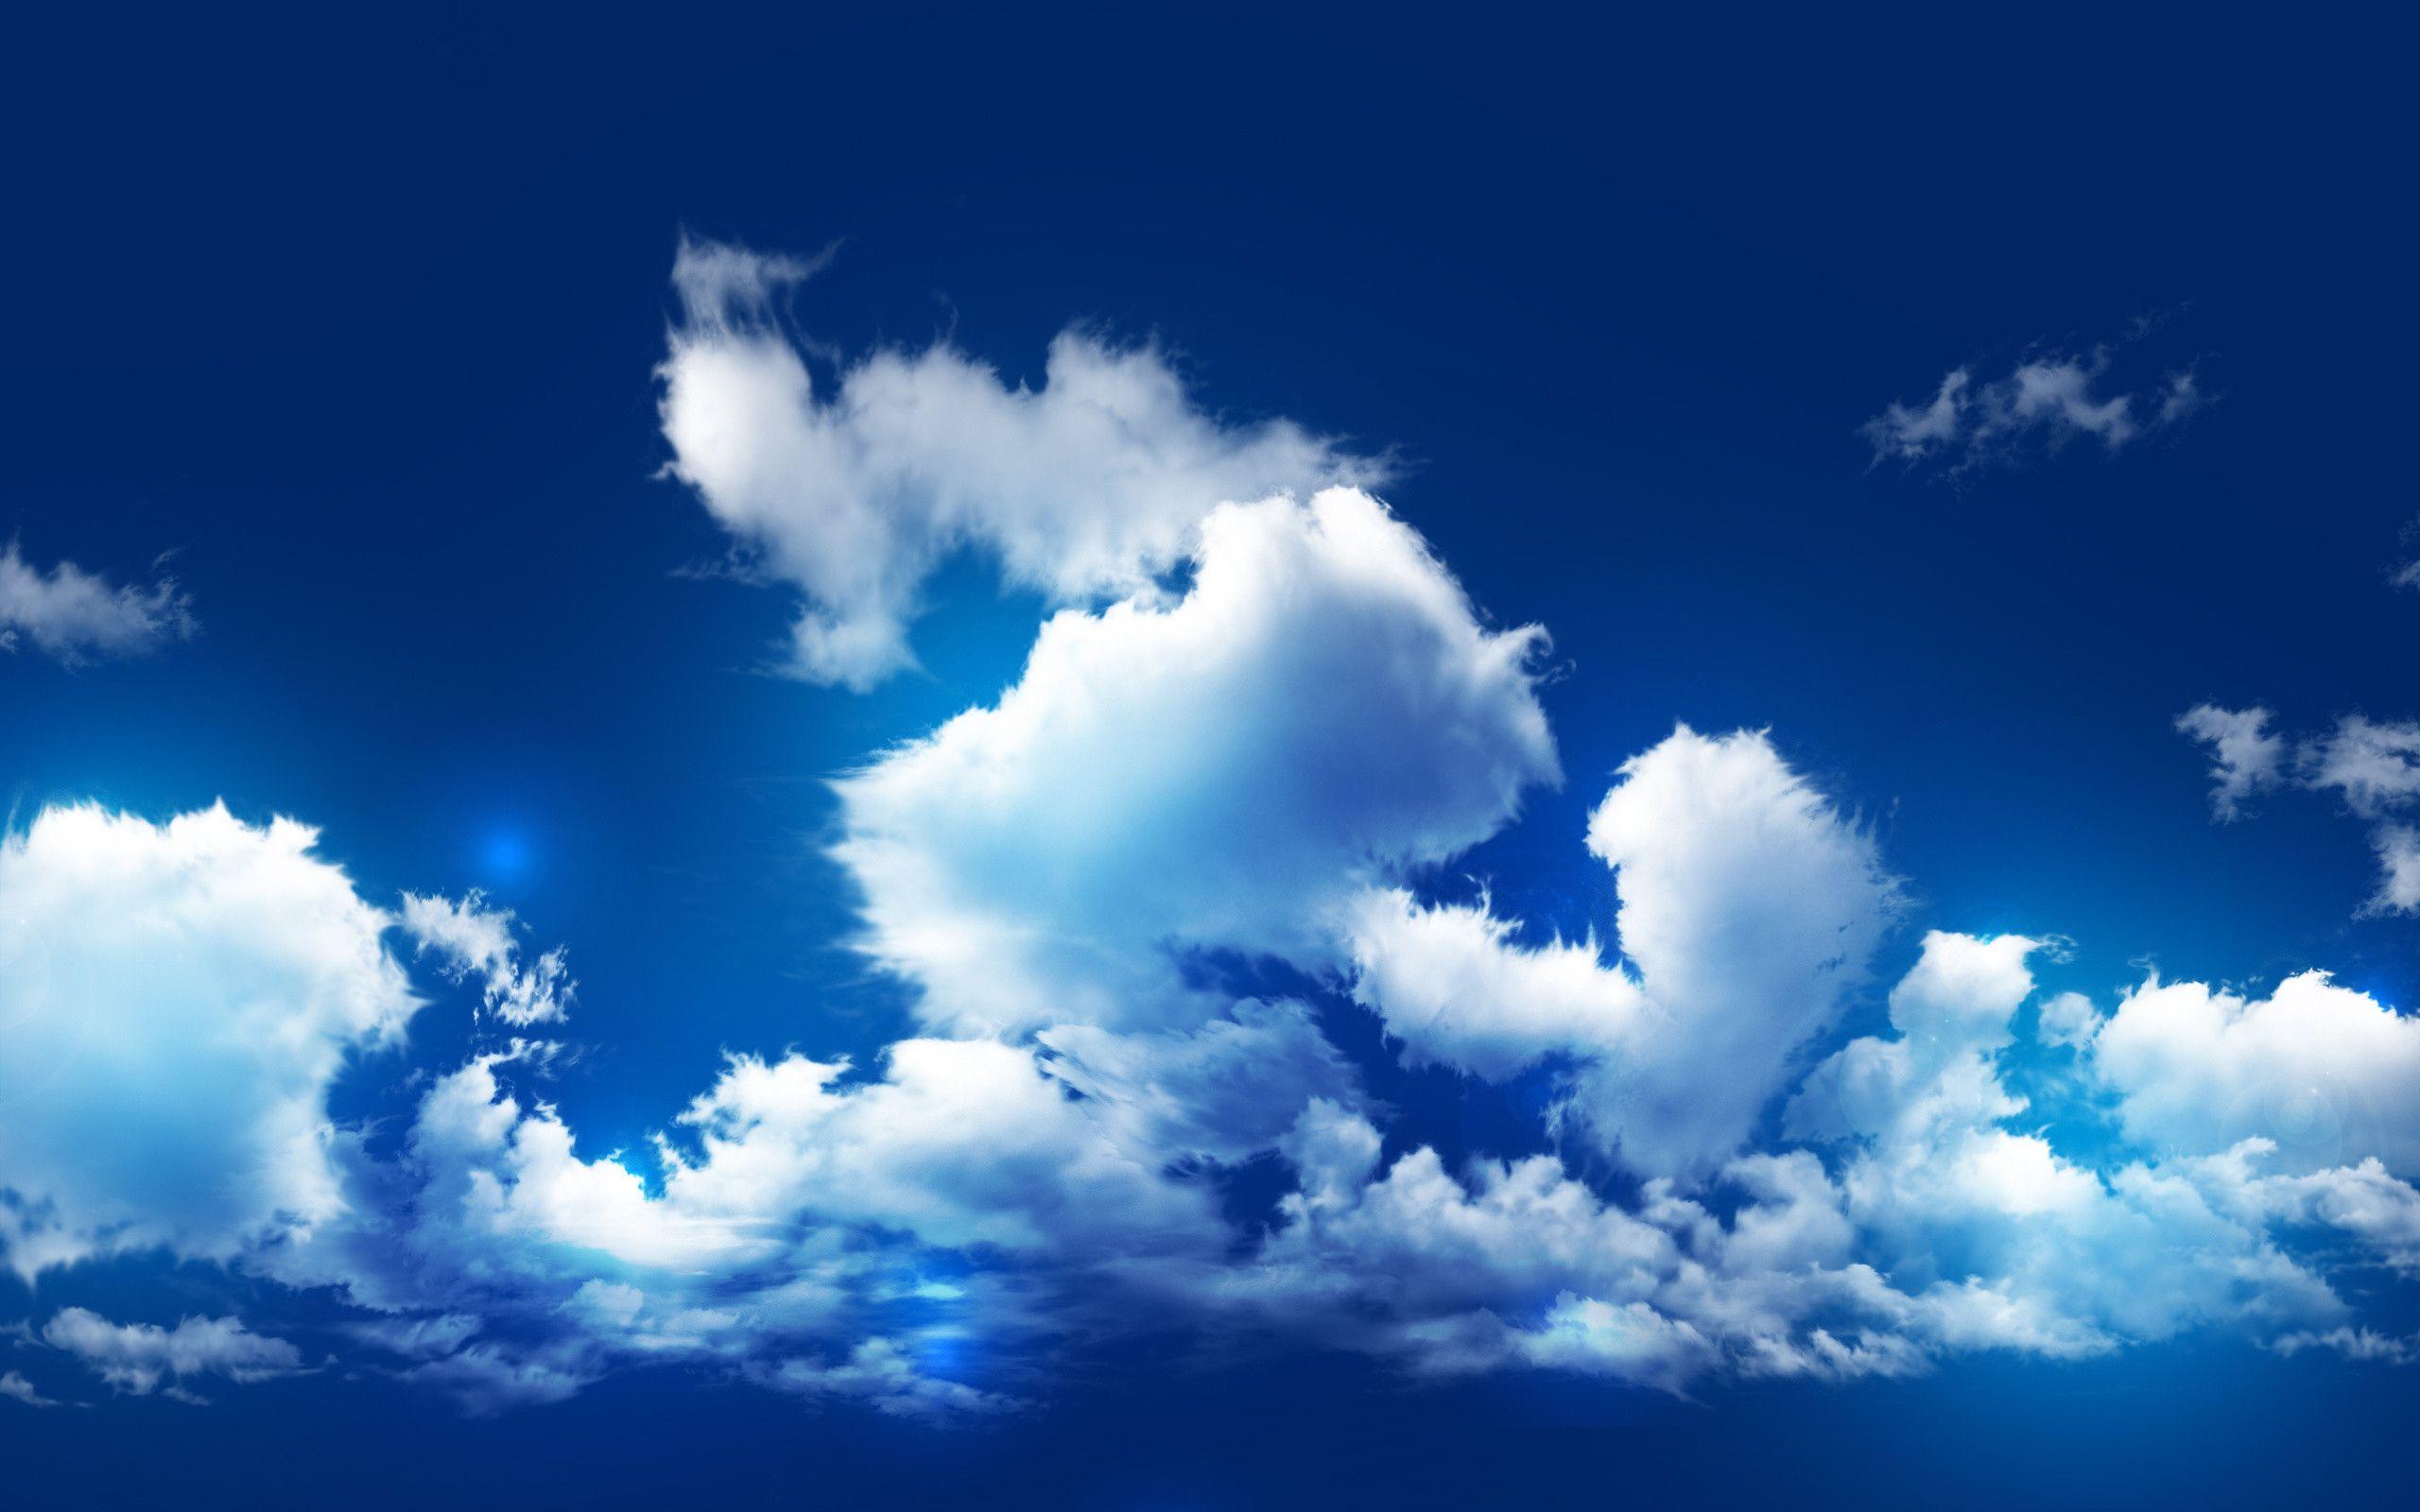 Cloud Wallpaper Images  Free Download on Freepik